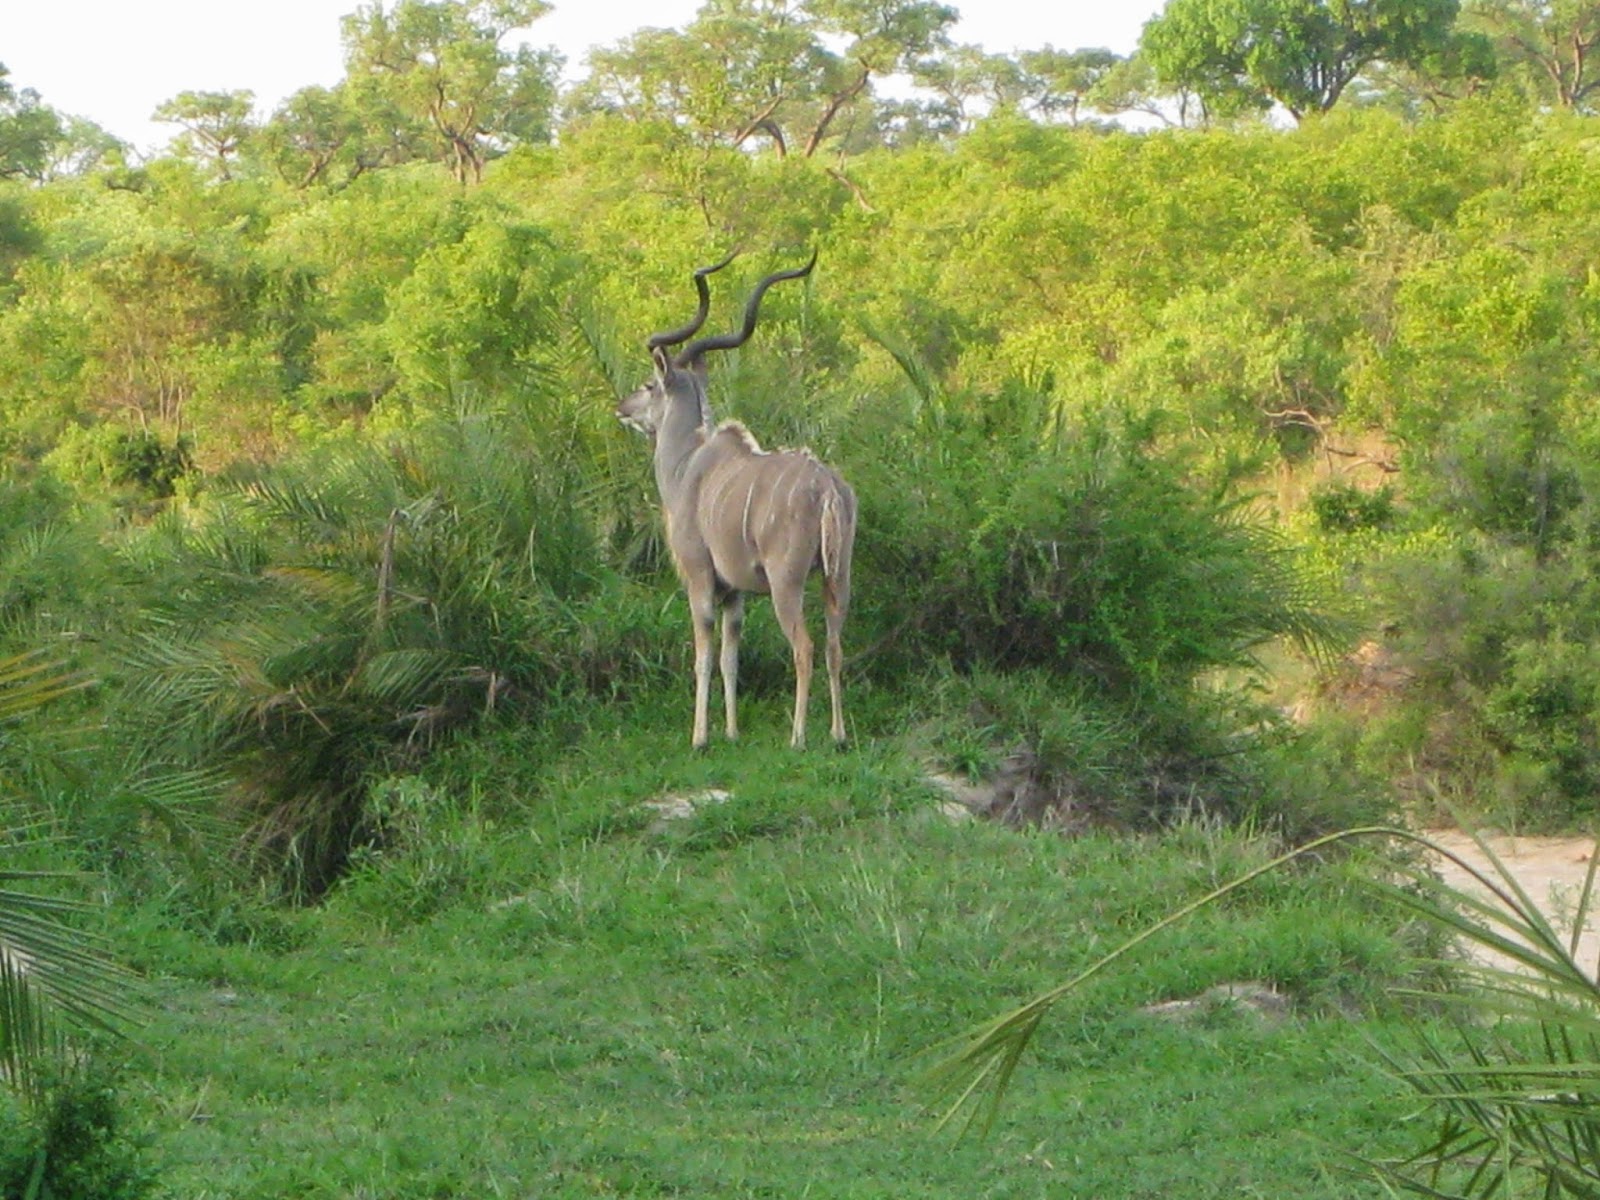 Sabi Sands - This kudu looked majestic